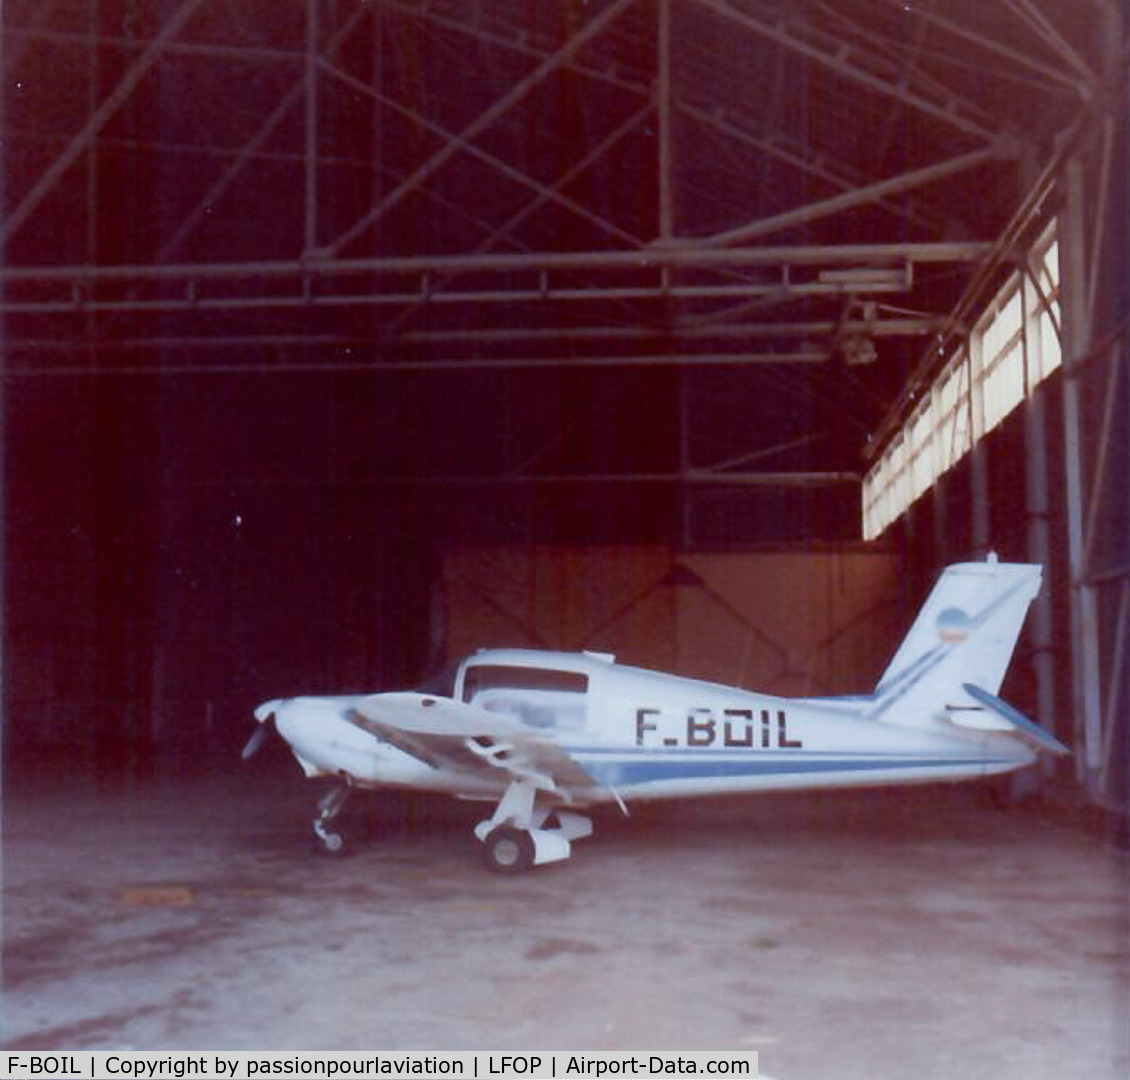 F-BOIL, Morane-Saulnier MS-885 Super Rallye C/N 430, hangar